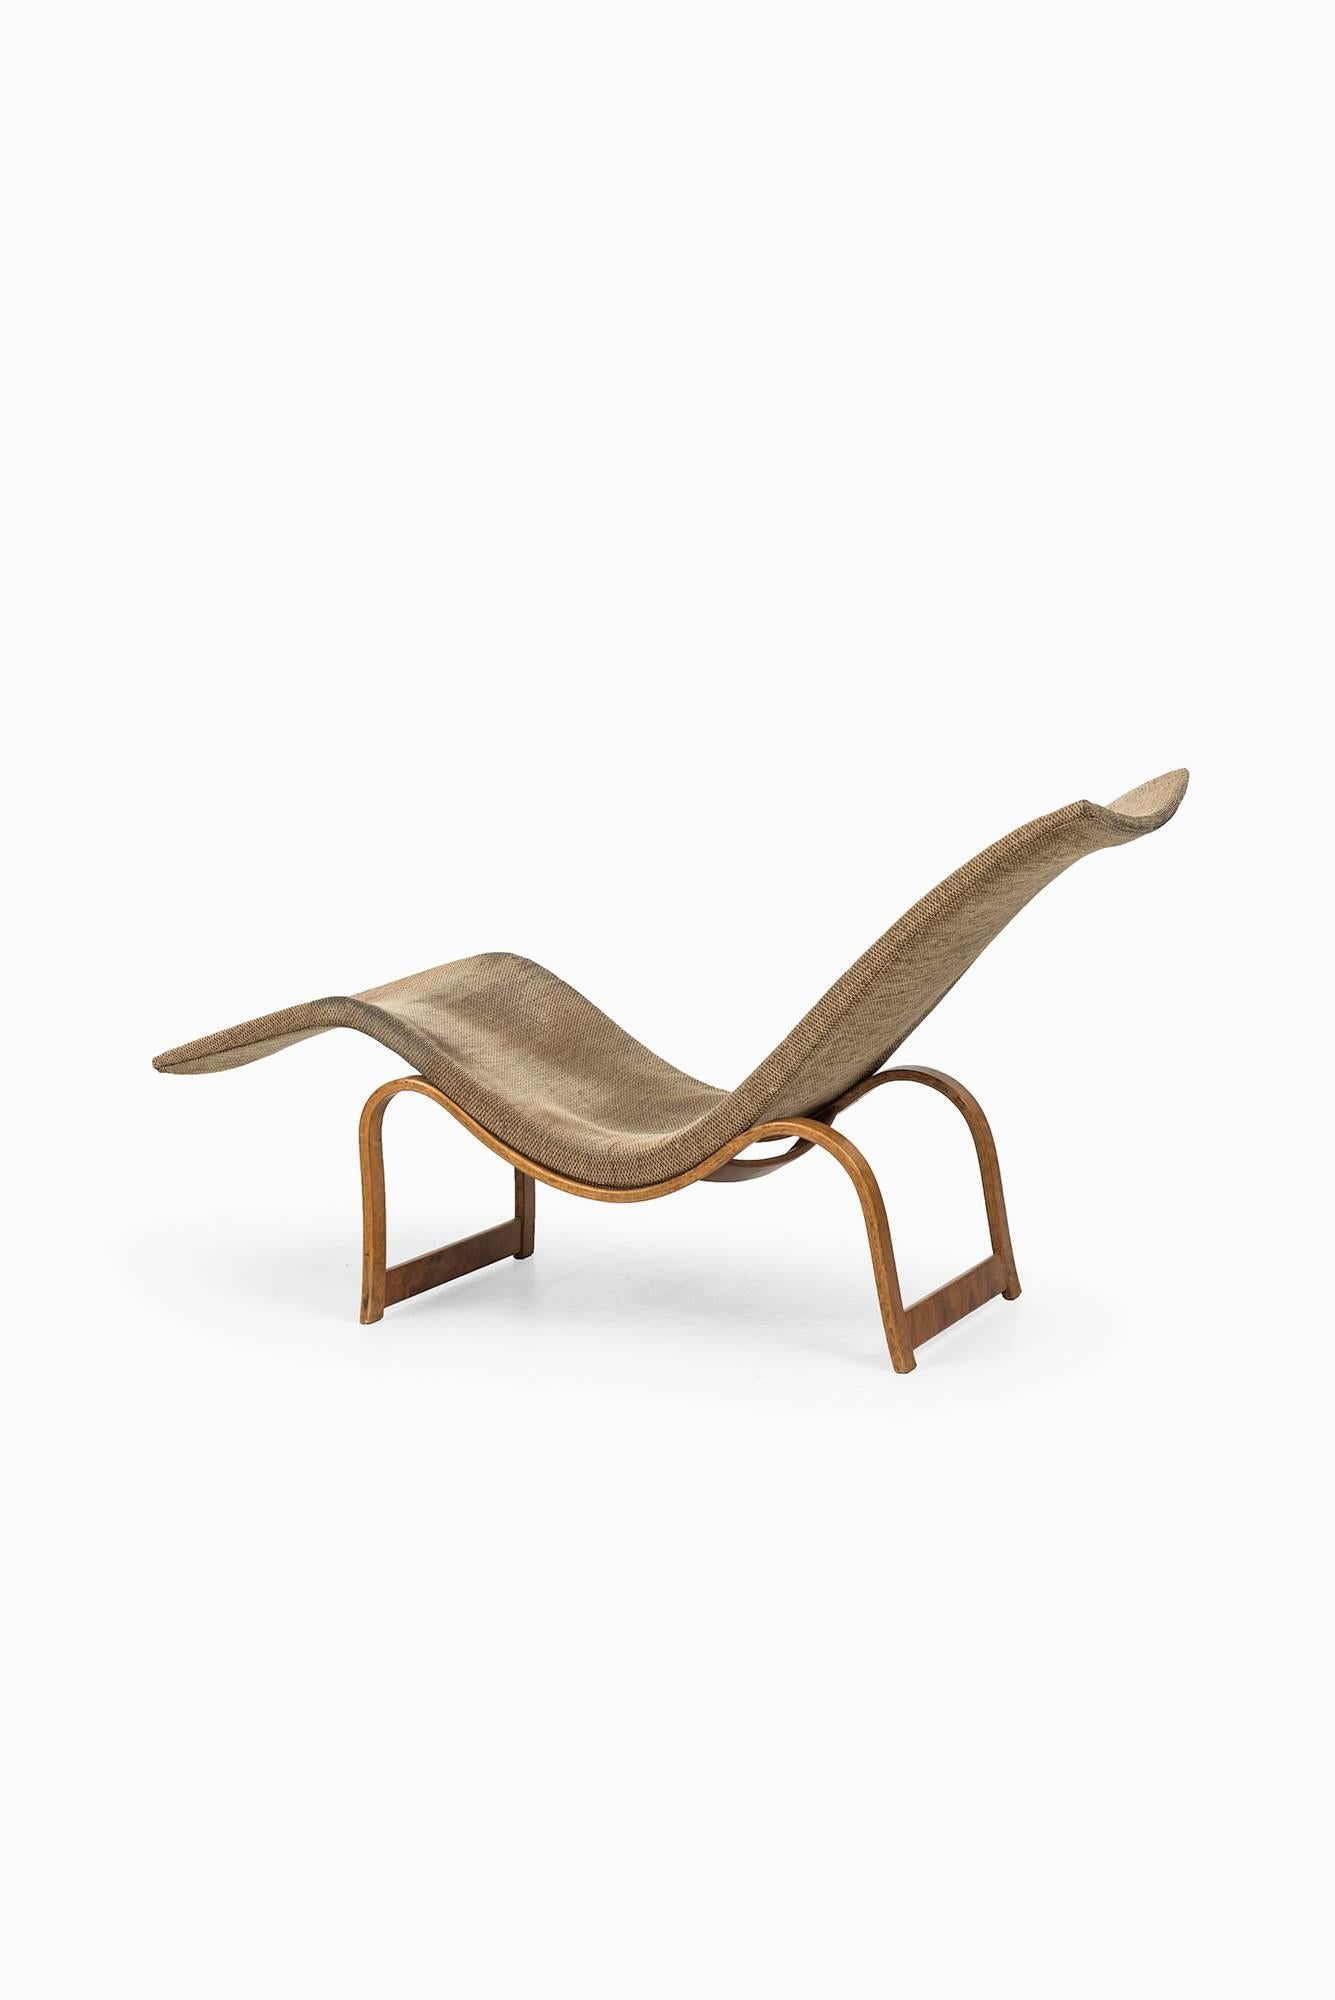 Swedish Bruno Mathsson Lounge Chair Model 36 by Karl Mathsson in Sweden